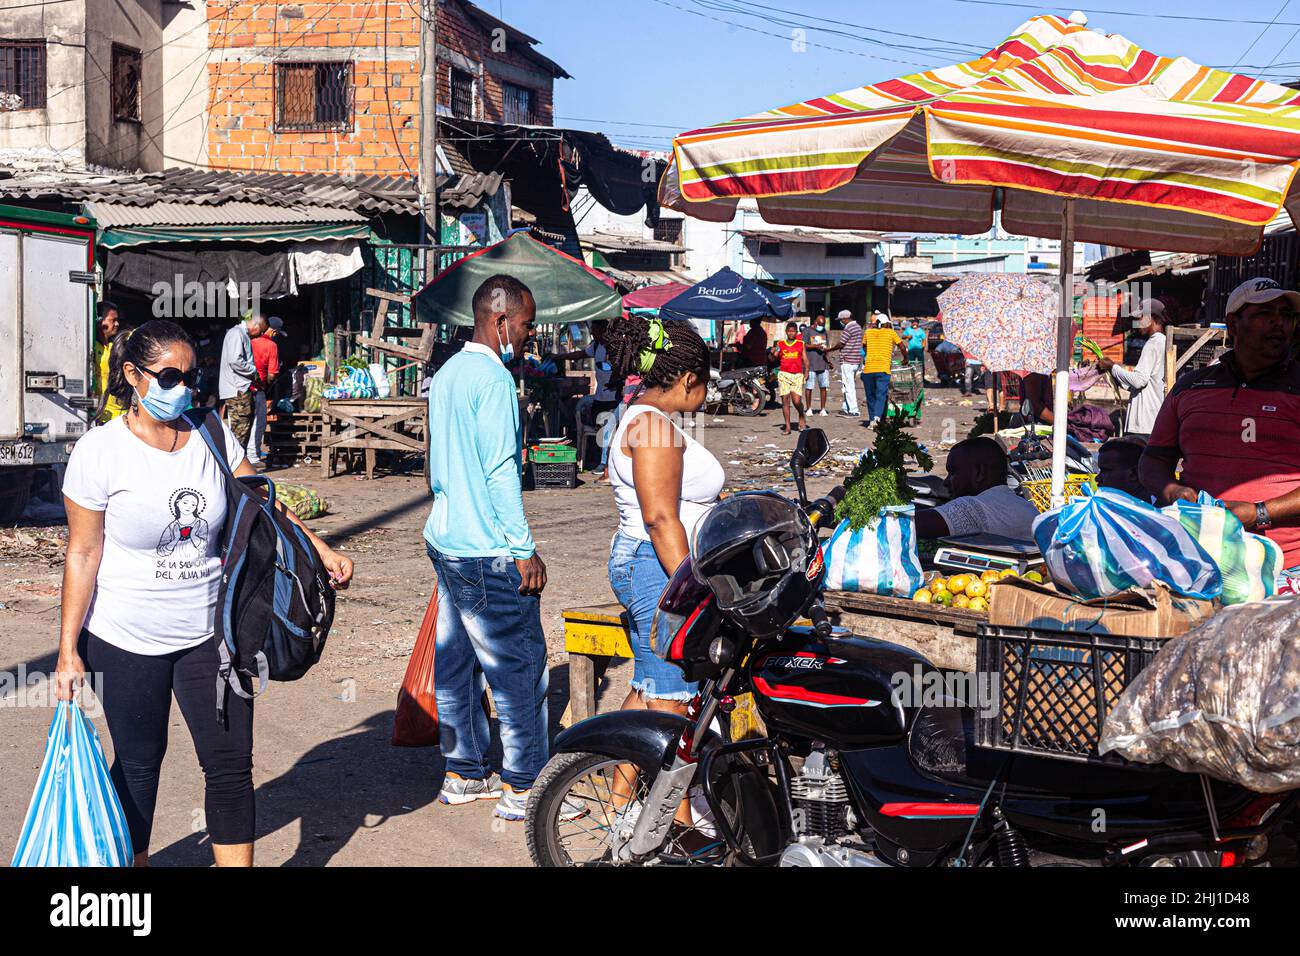 Street scene on public market Mercado Bazurto, Cartagena de Indias, Colombia. Stock Photo